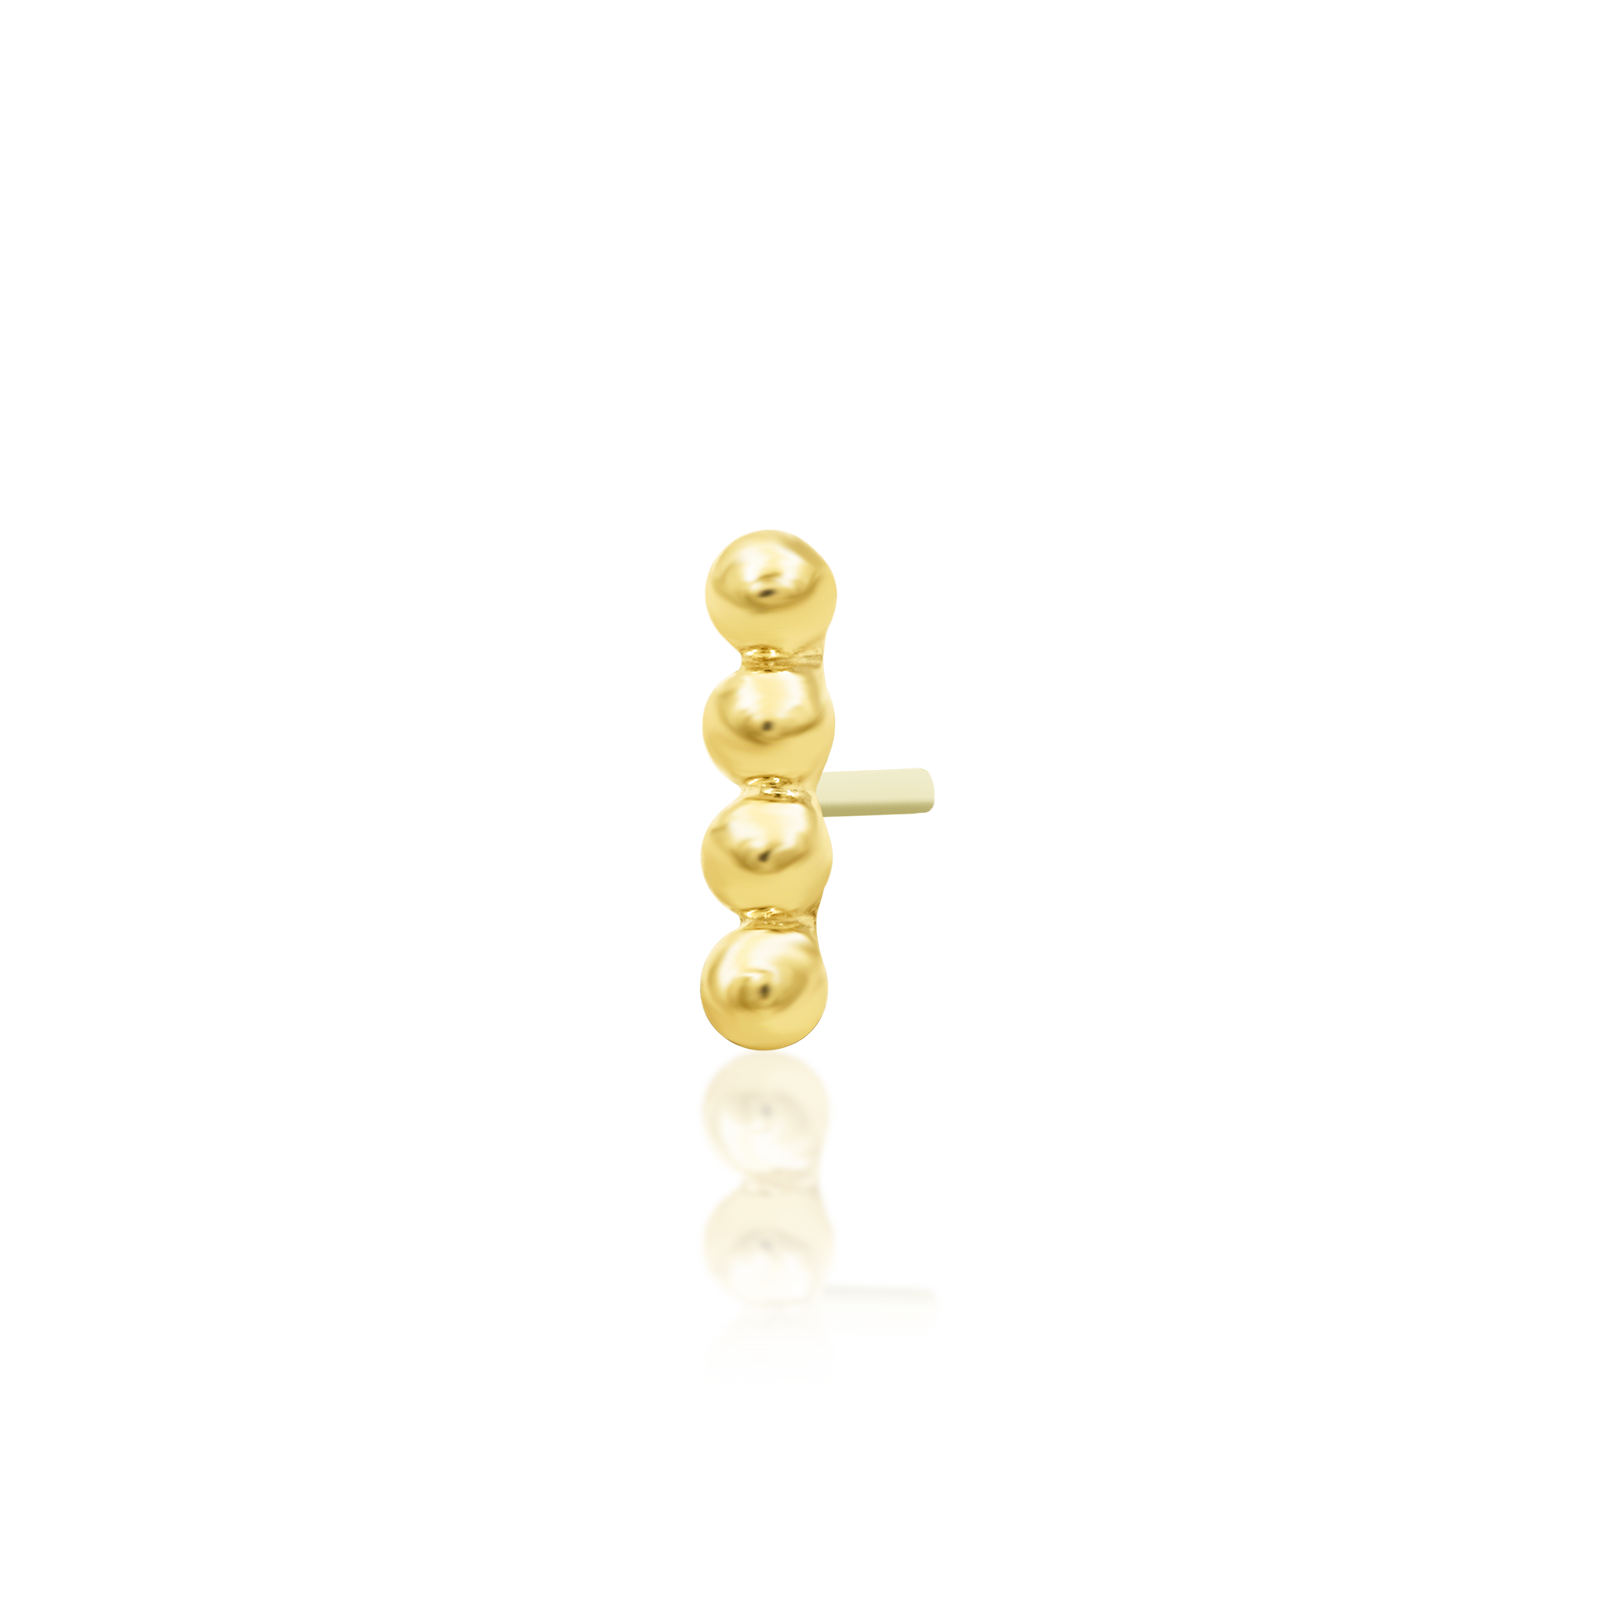 Beads-of-4 in 14k Gold by Junipurr